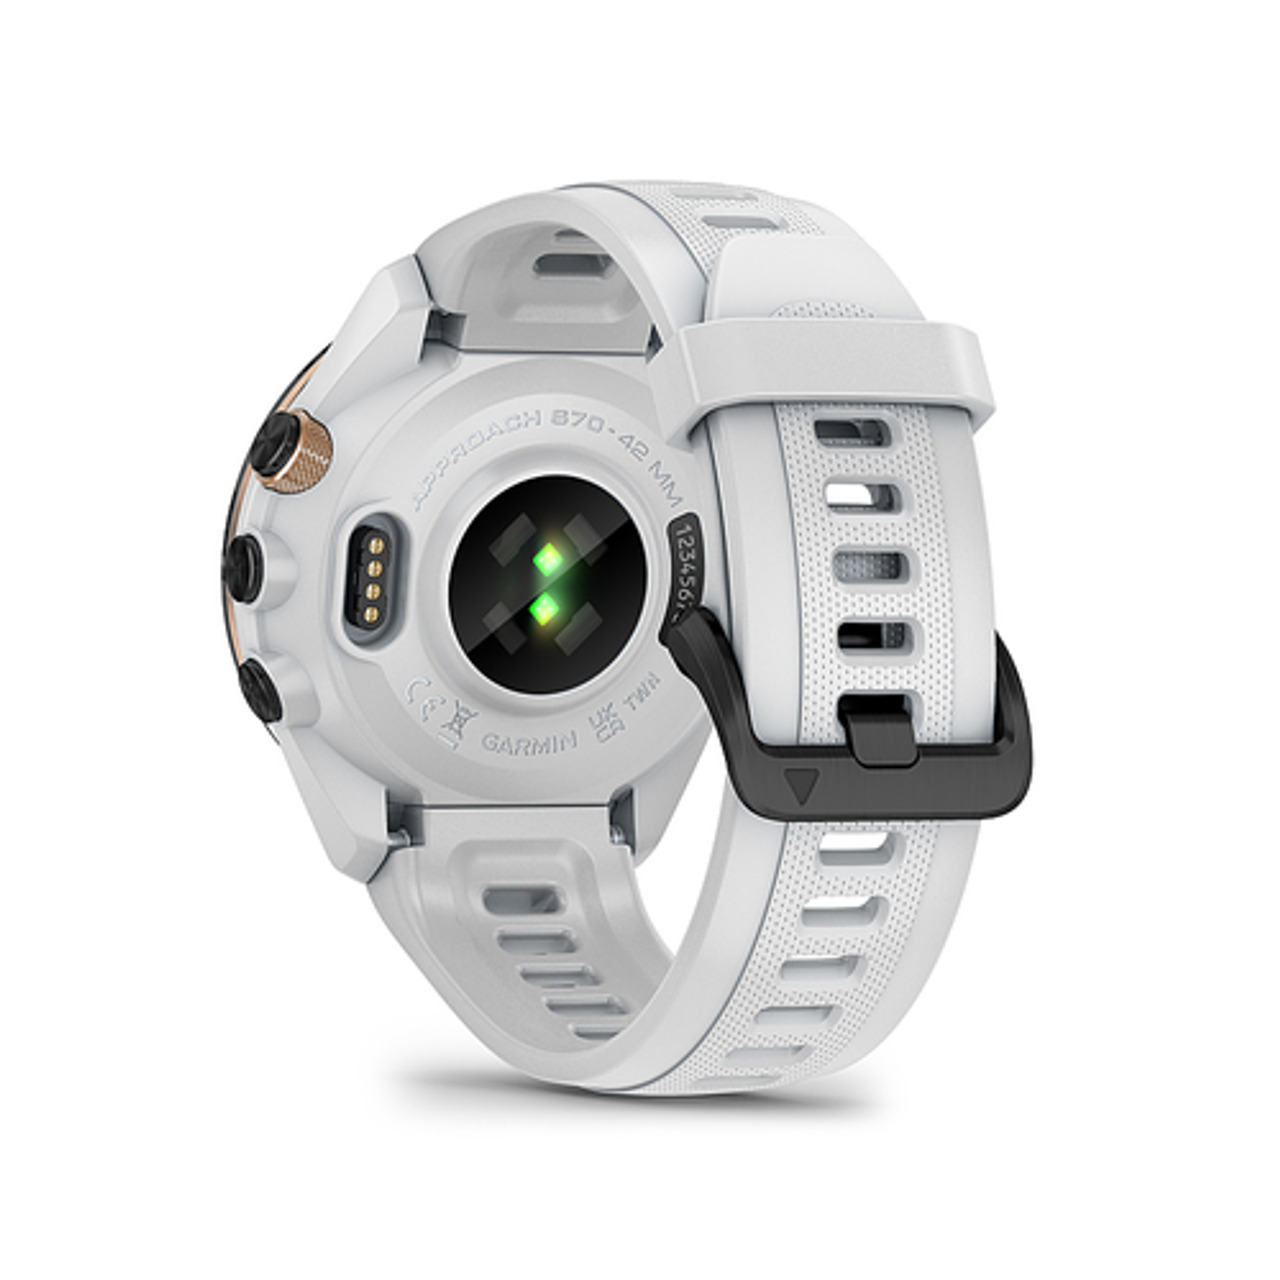 Garmin - Approach S70 GPS Smartwatch 42mm Ceramic - Black Ceramic Bezel with White Silicone Band